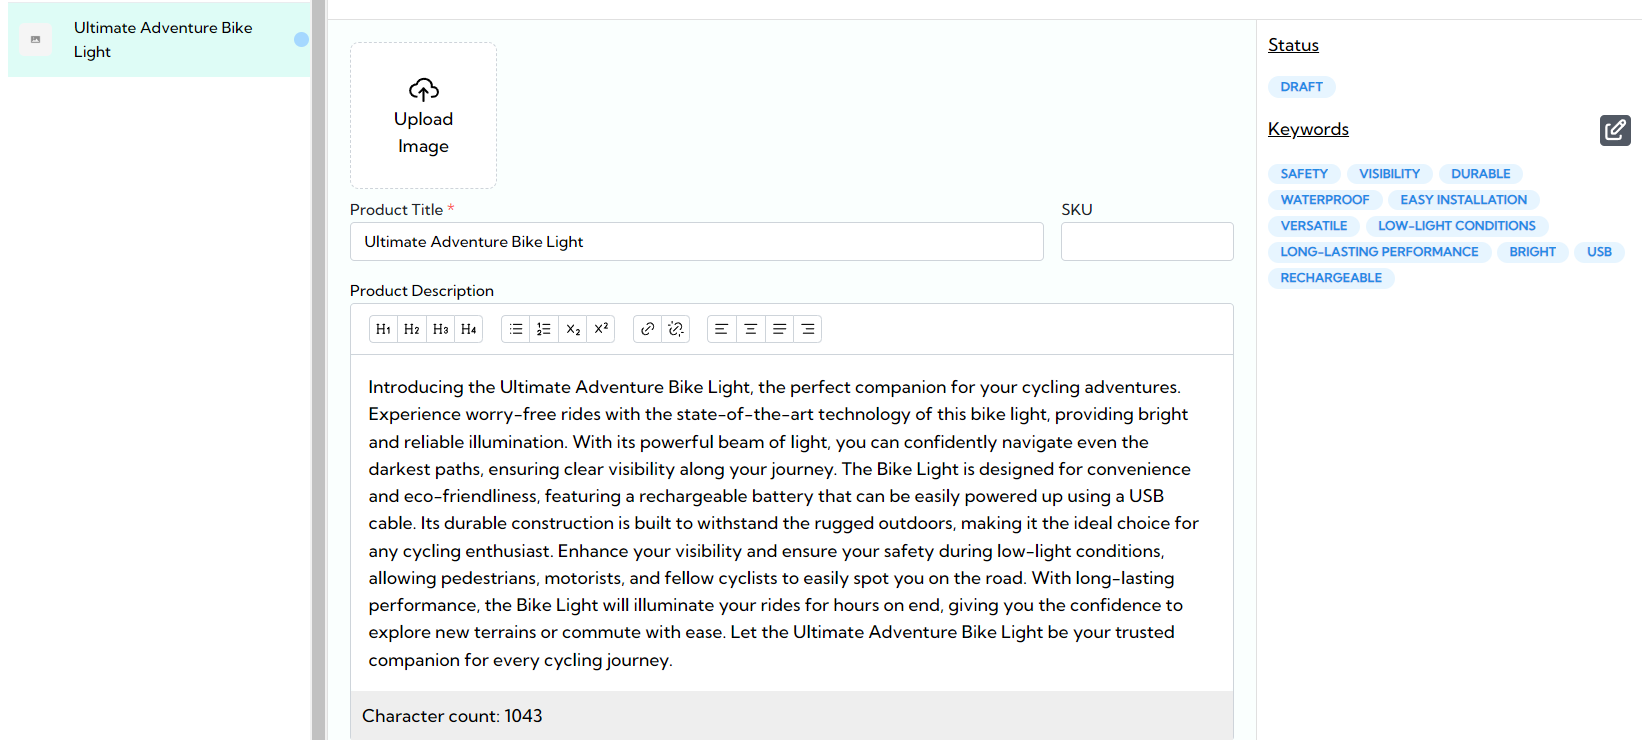 bike light description example with custom ruleset